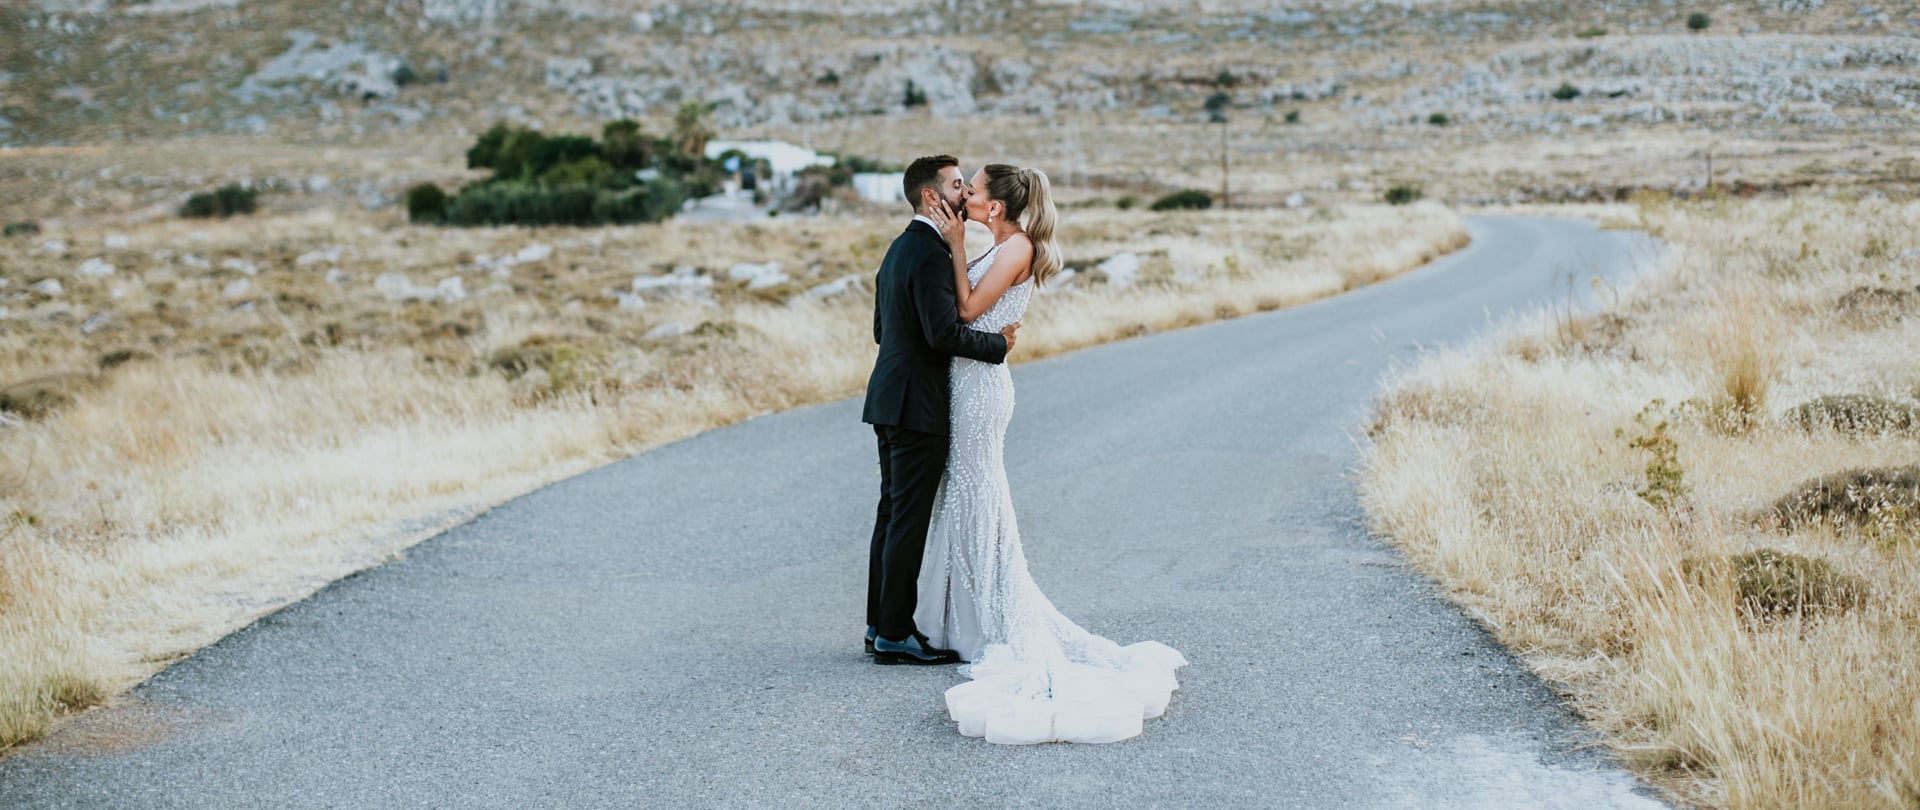 Georgia & Michael Wedding Video Filmed at Rhodes, Greece